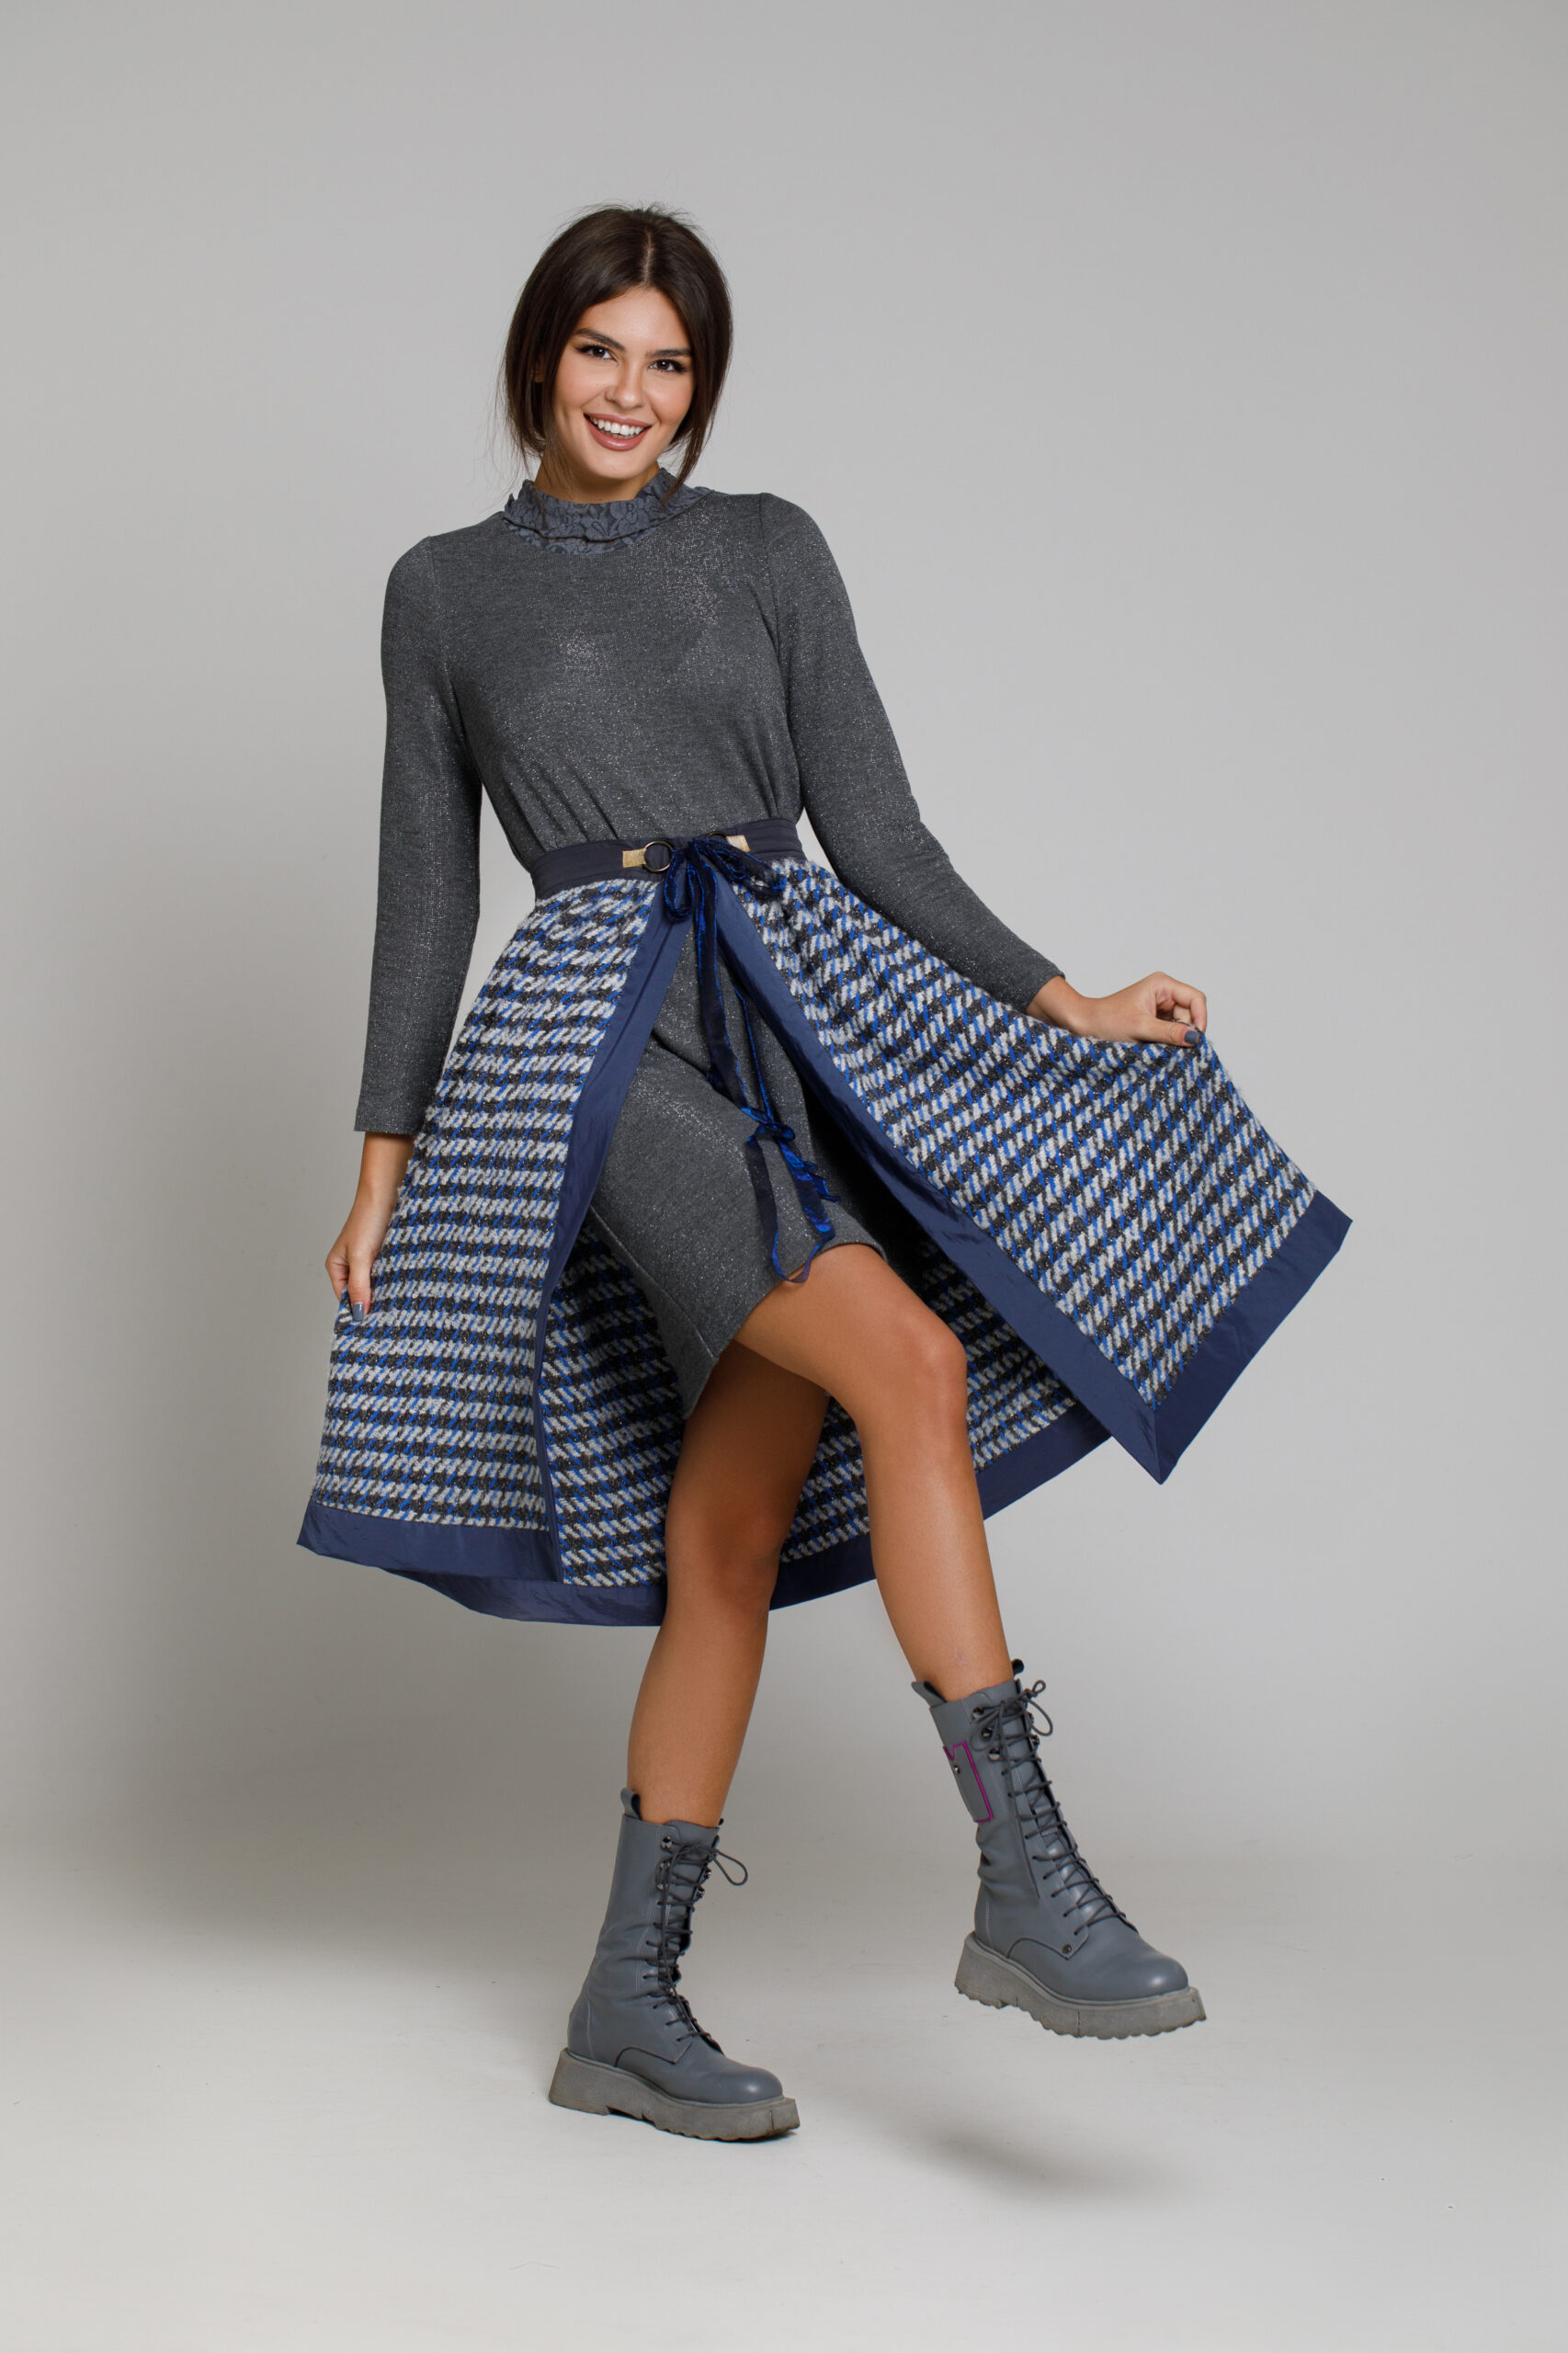 Gray VANORA dress and detachable woolen skirt. Natural fabrics, original design, handmade embroidery